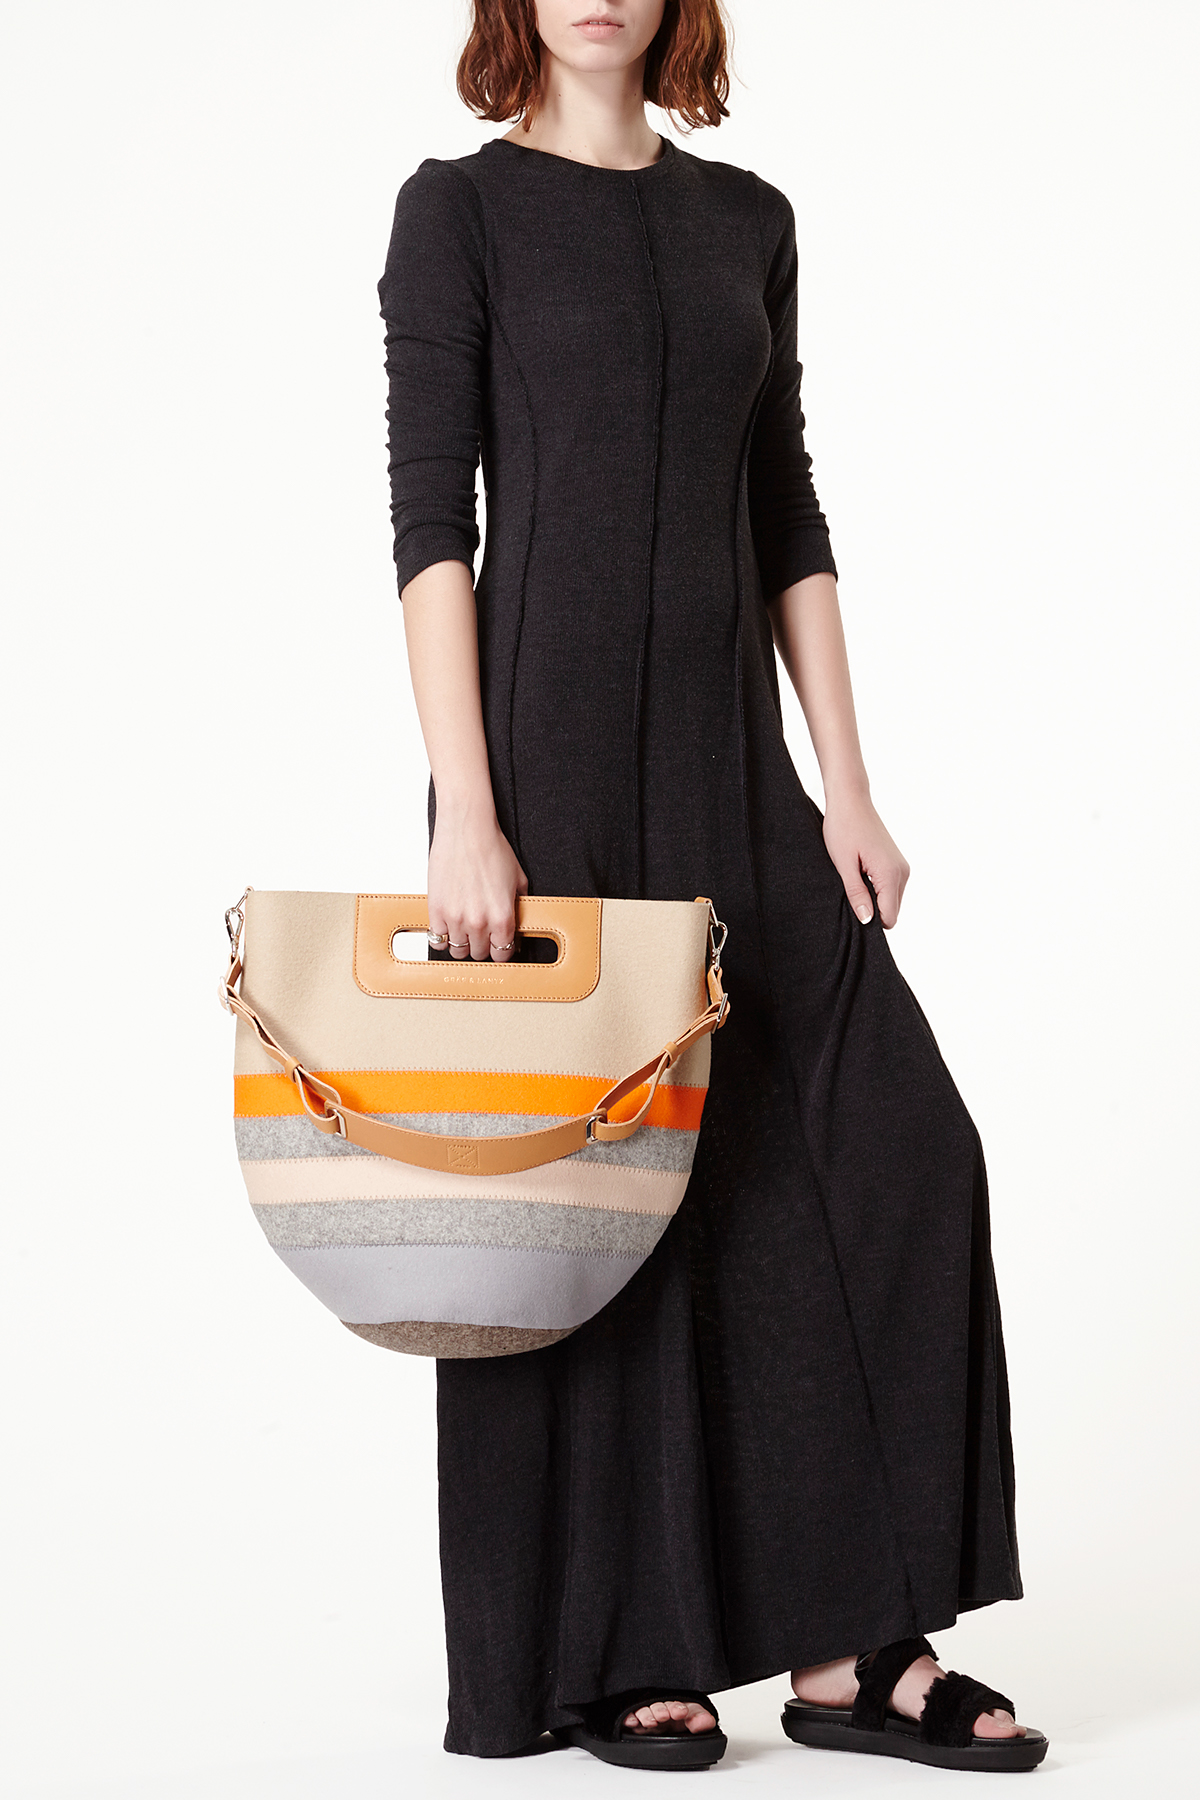 styling  design accessories handbags eComerce